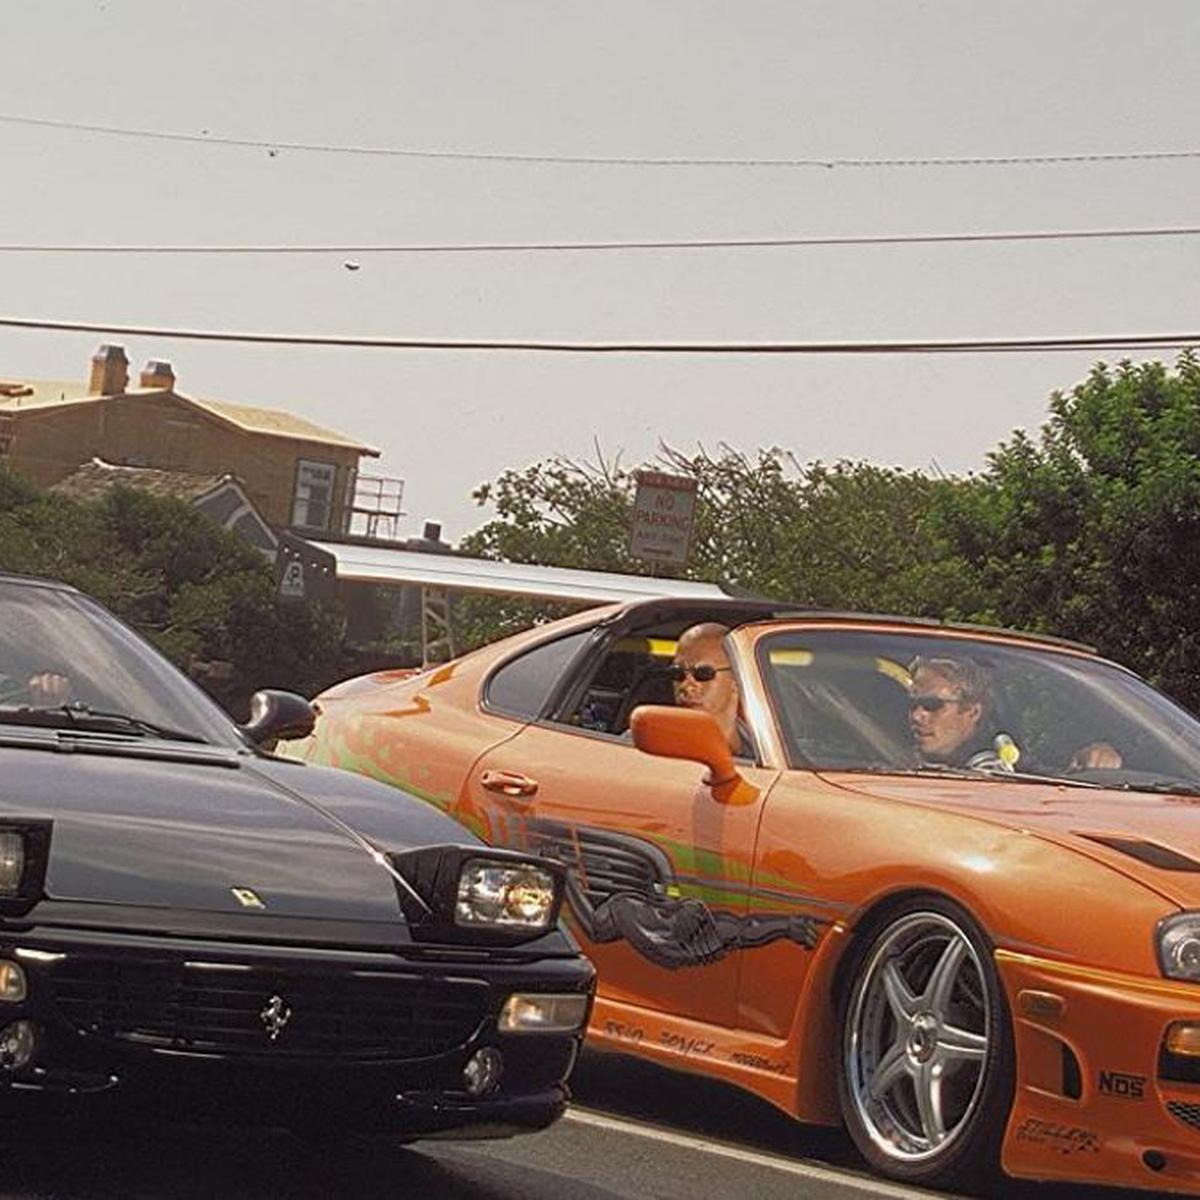 Auto de Paul Walker en “Fast & Furious” ha sido subastado